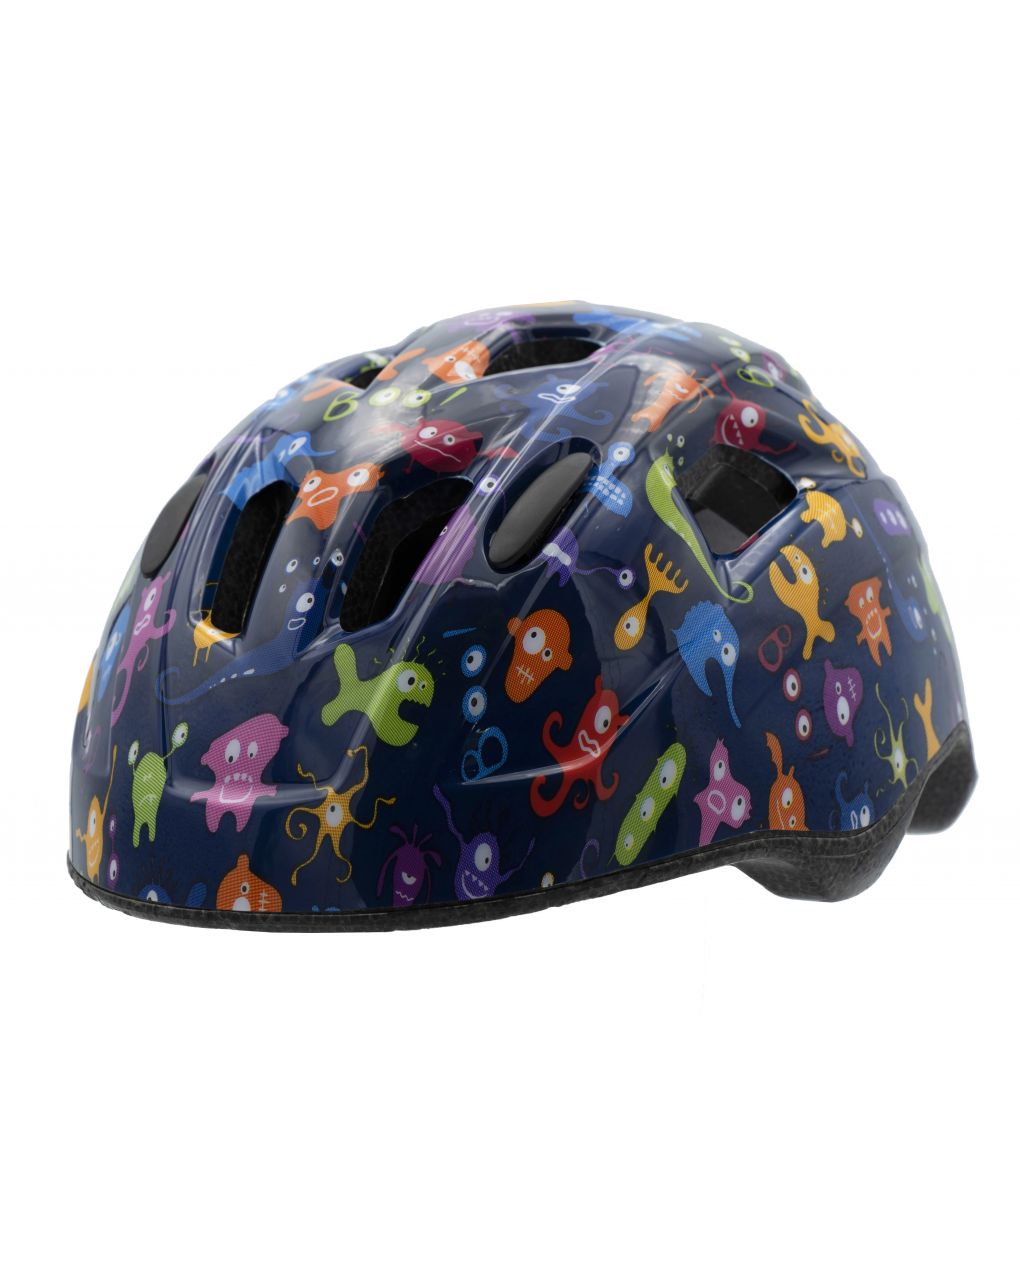 Pequeno monstro - capacete de bicicleta para crianças - Bellelli